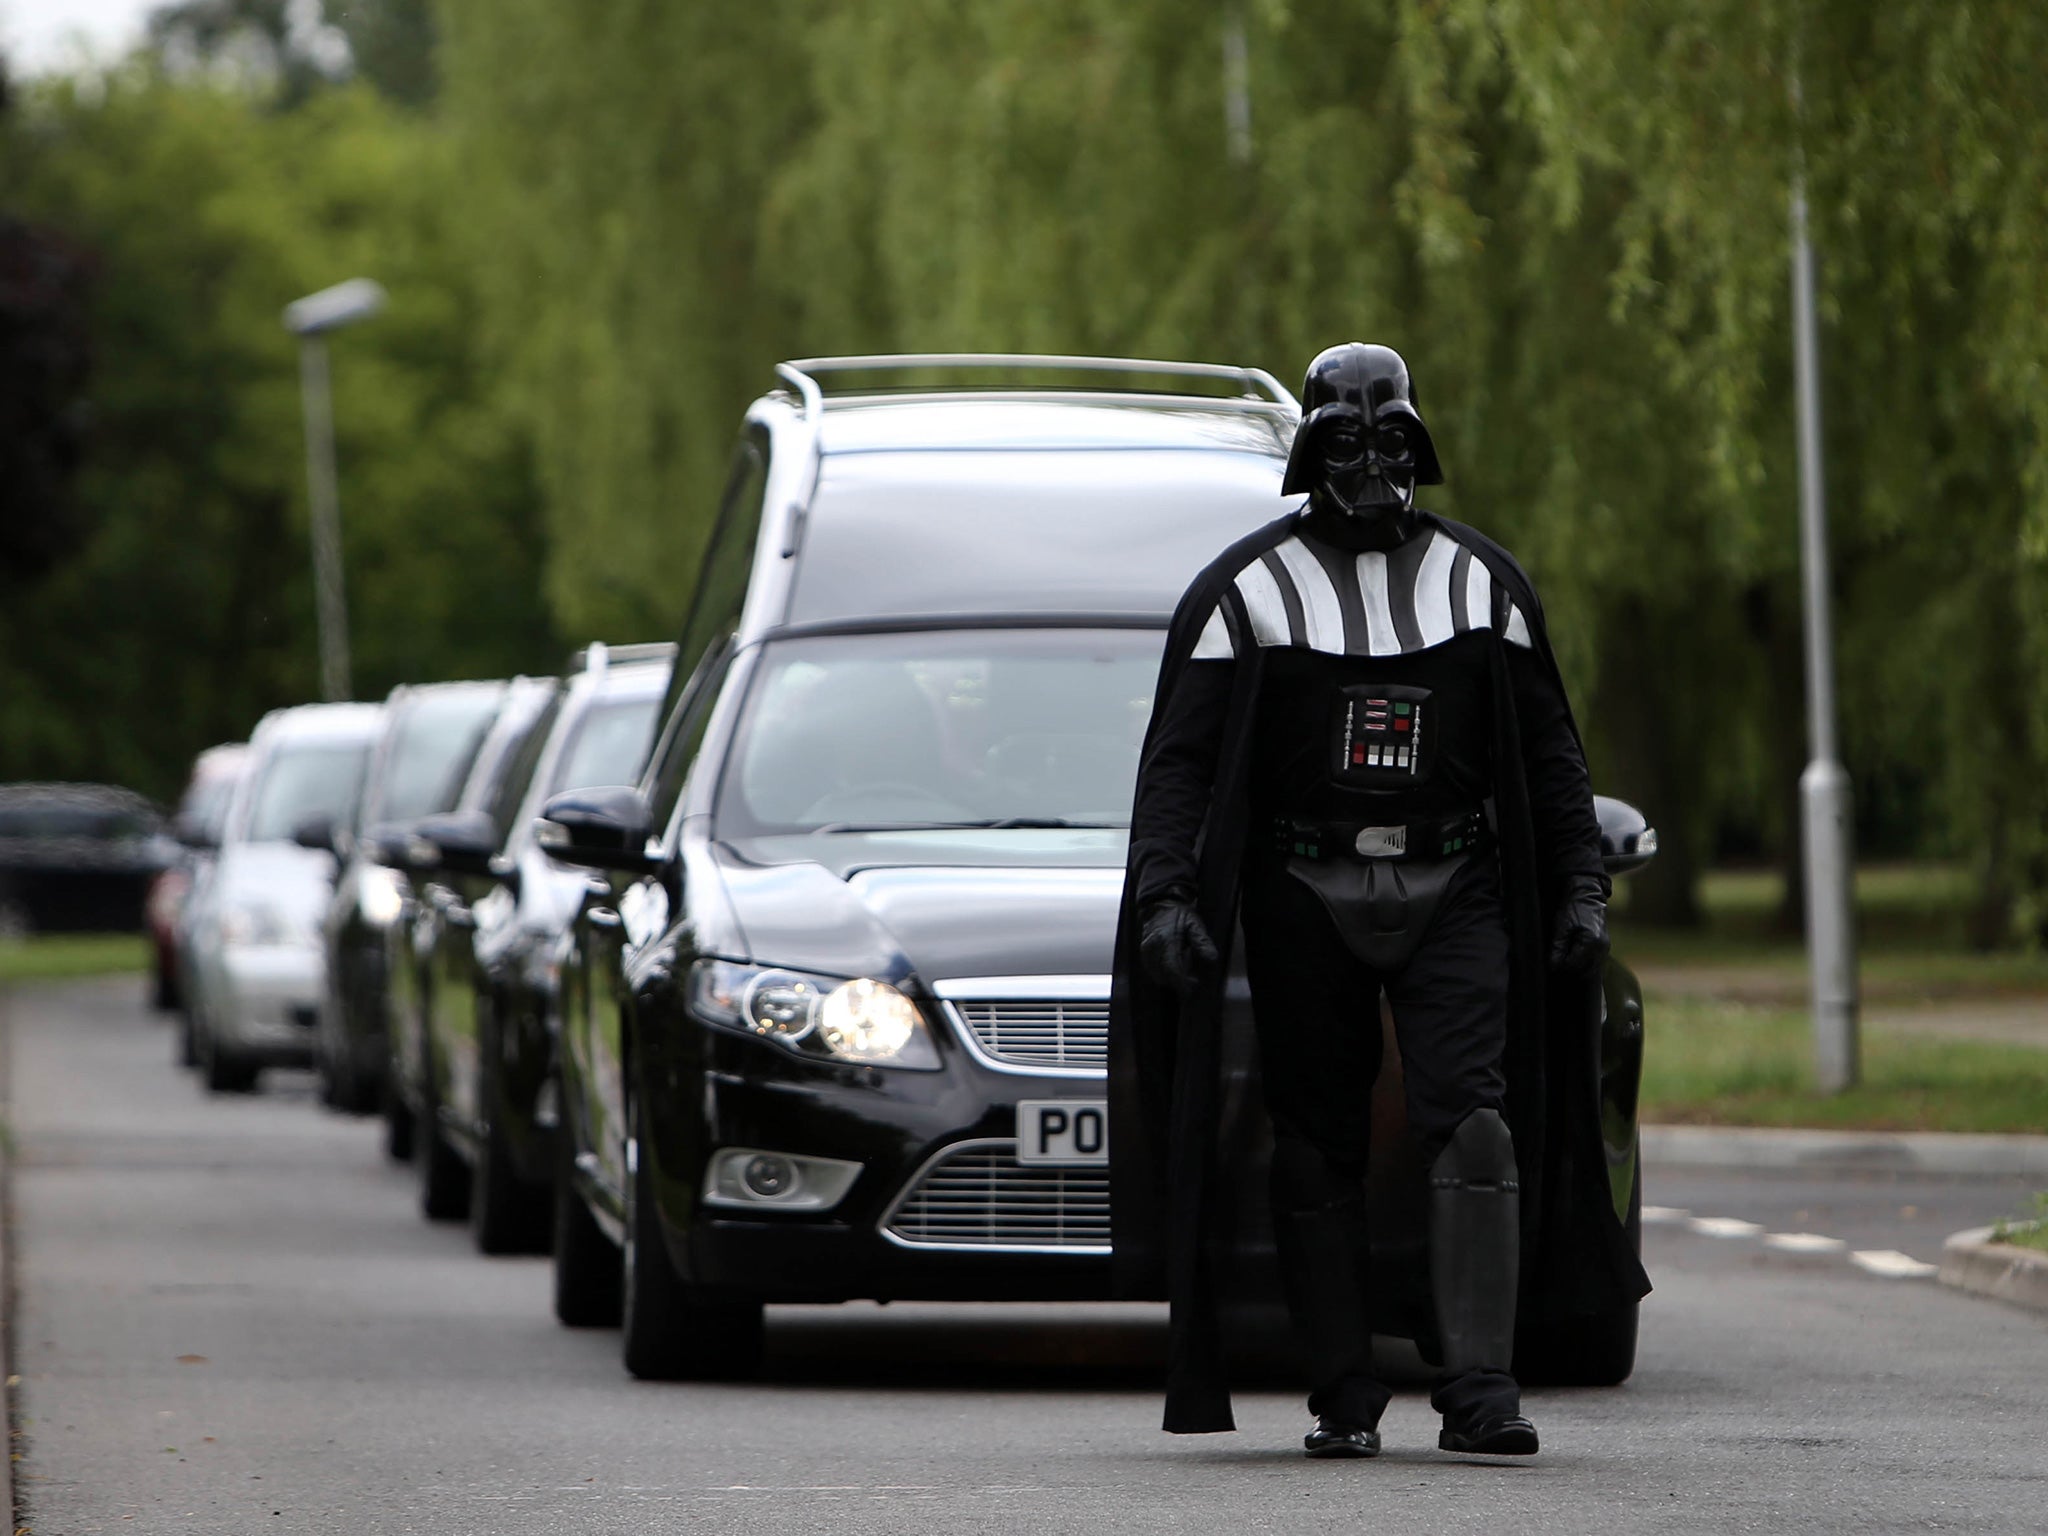 Funeral director Brett Houghton led Lorna Johnson's service dressed as Star Wars' Darth Vader